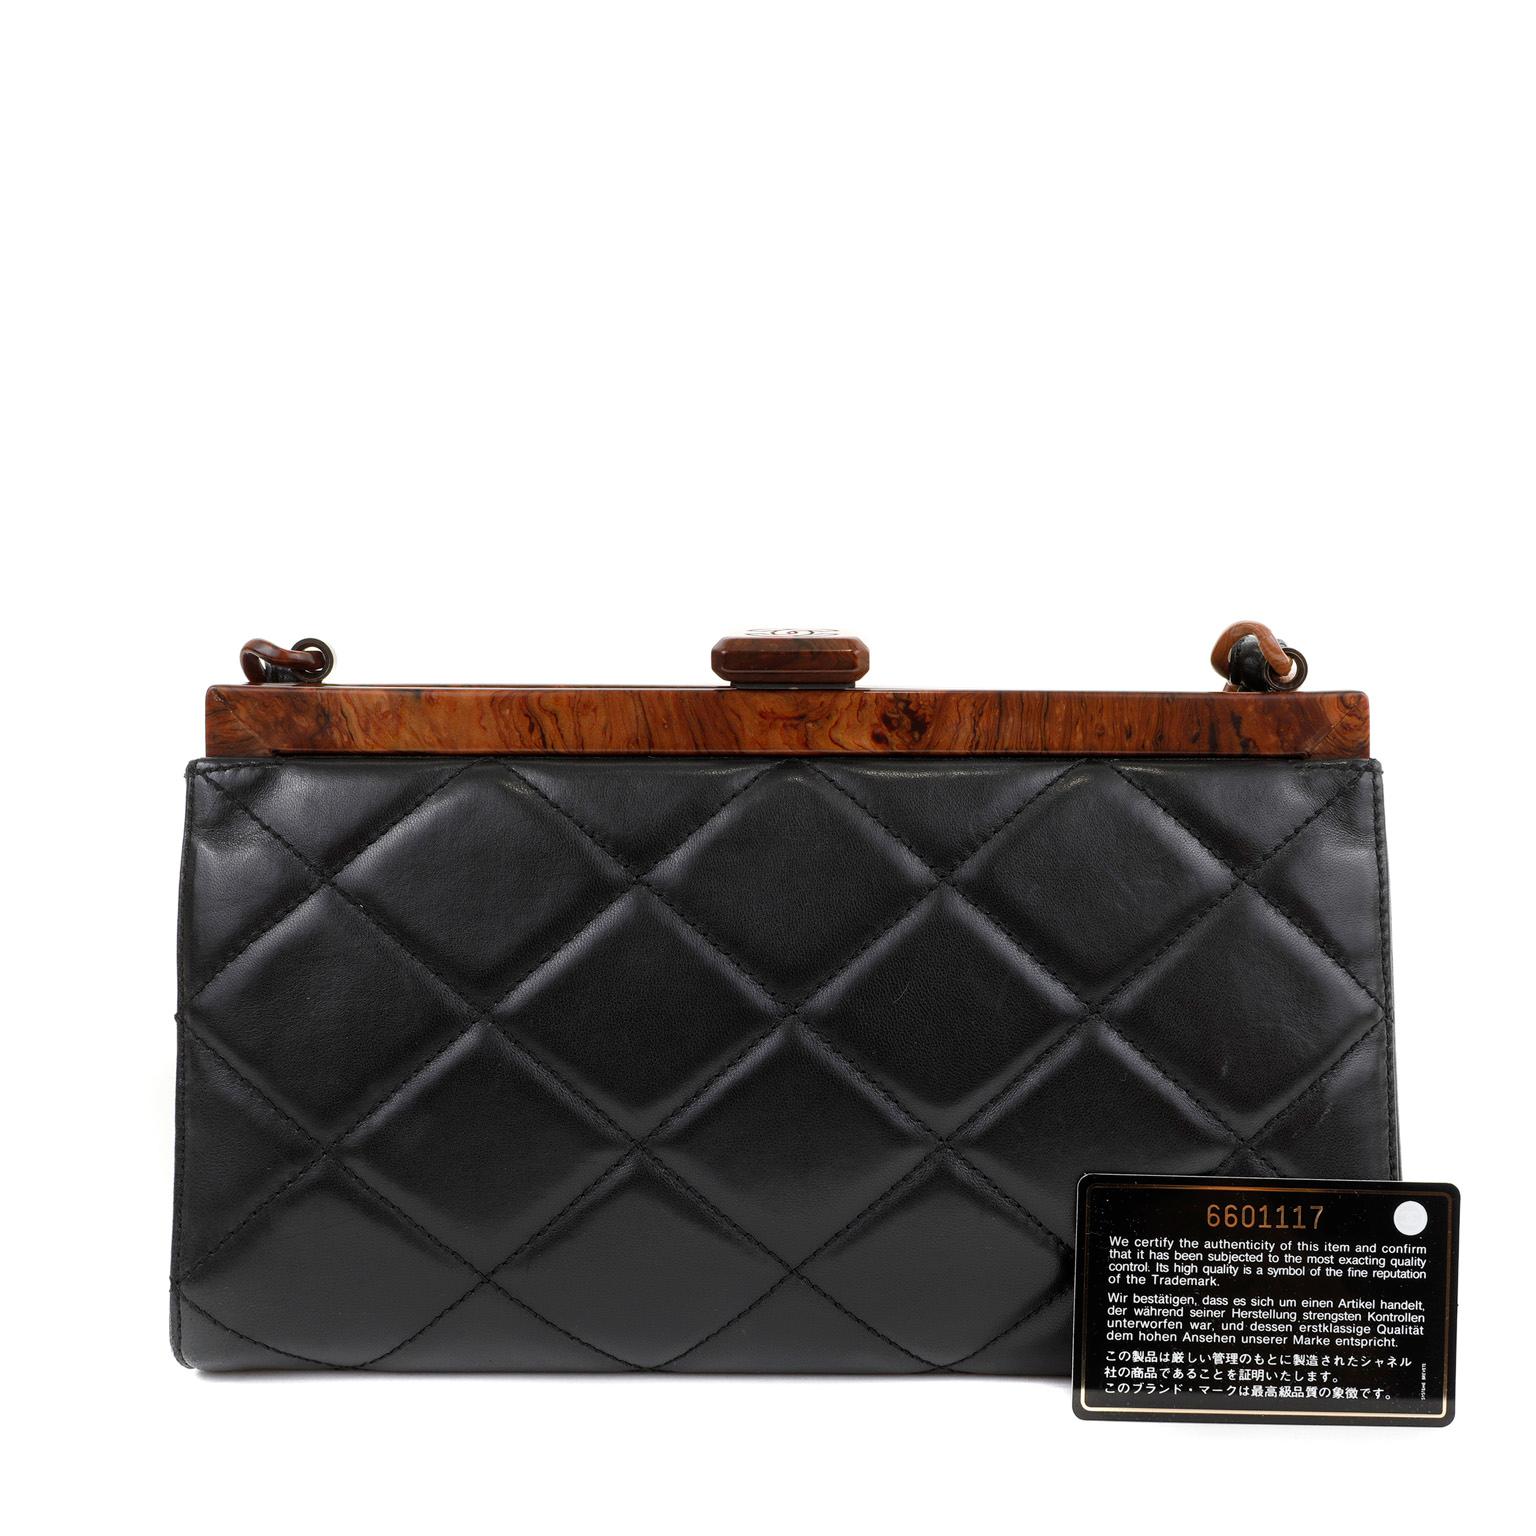 Chanel Black Quilted Leather Wood Framed Bag 5